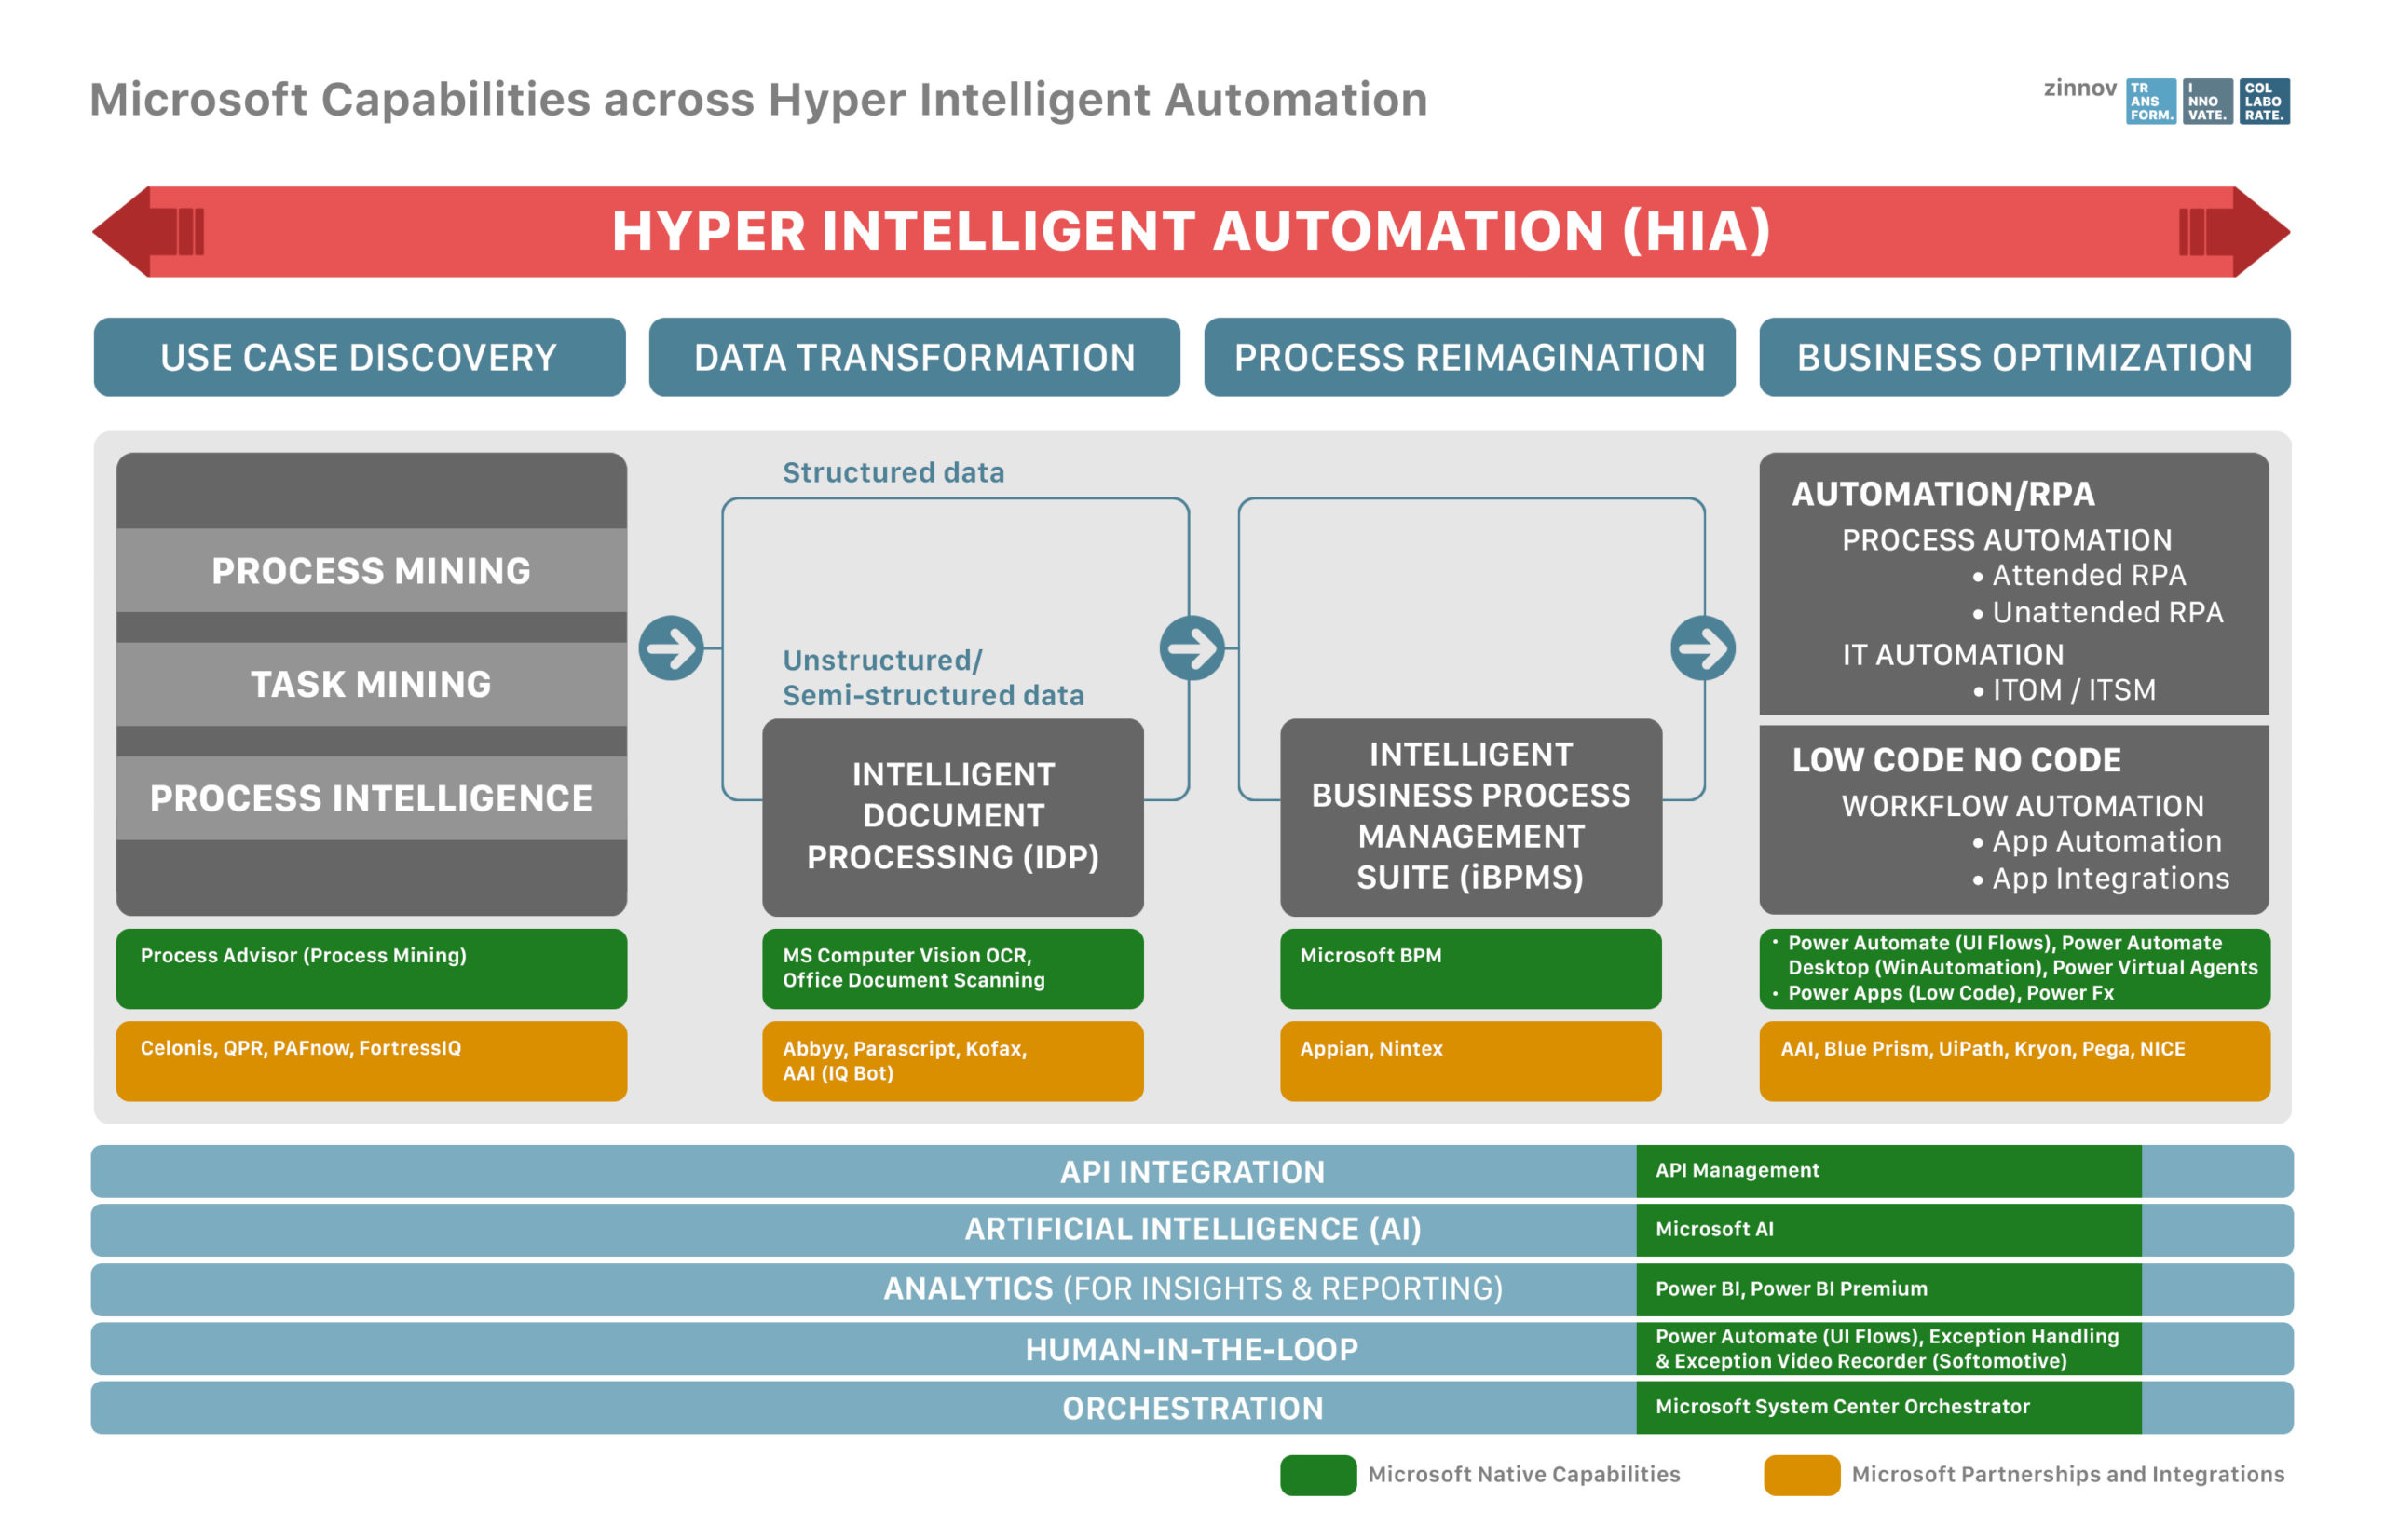 Microsoft capabilities across Hyper Intelligent Automation